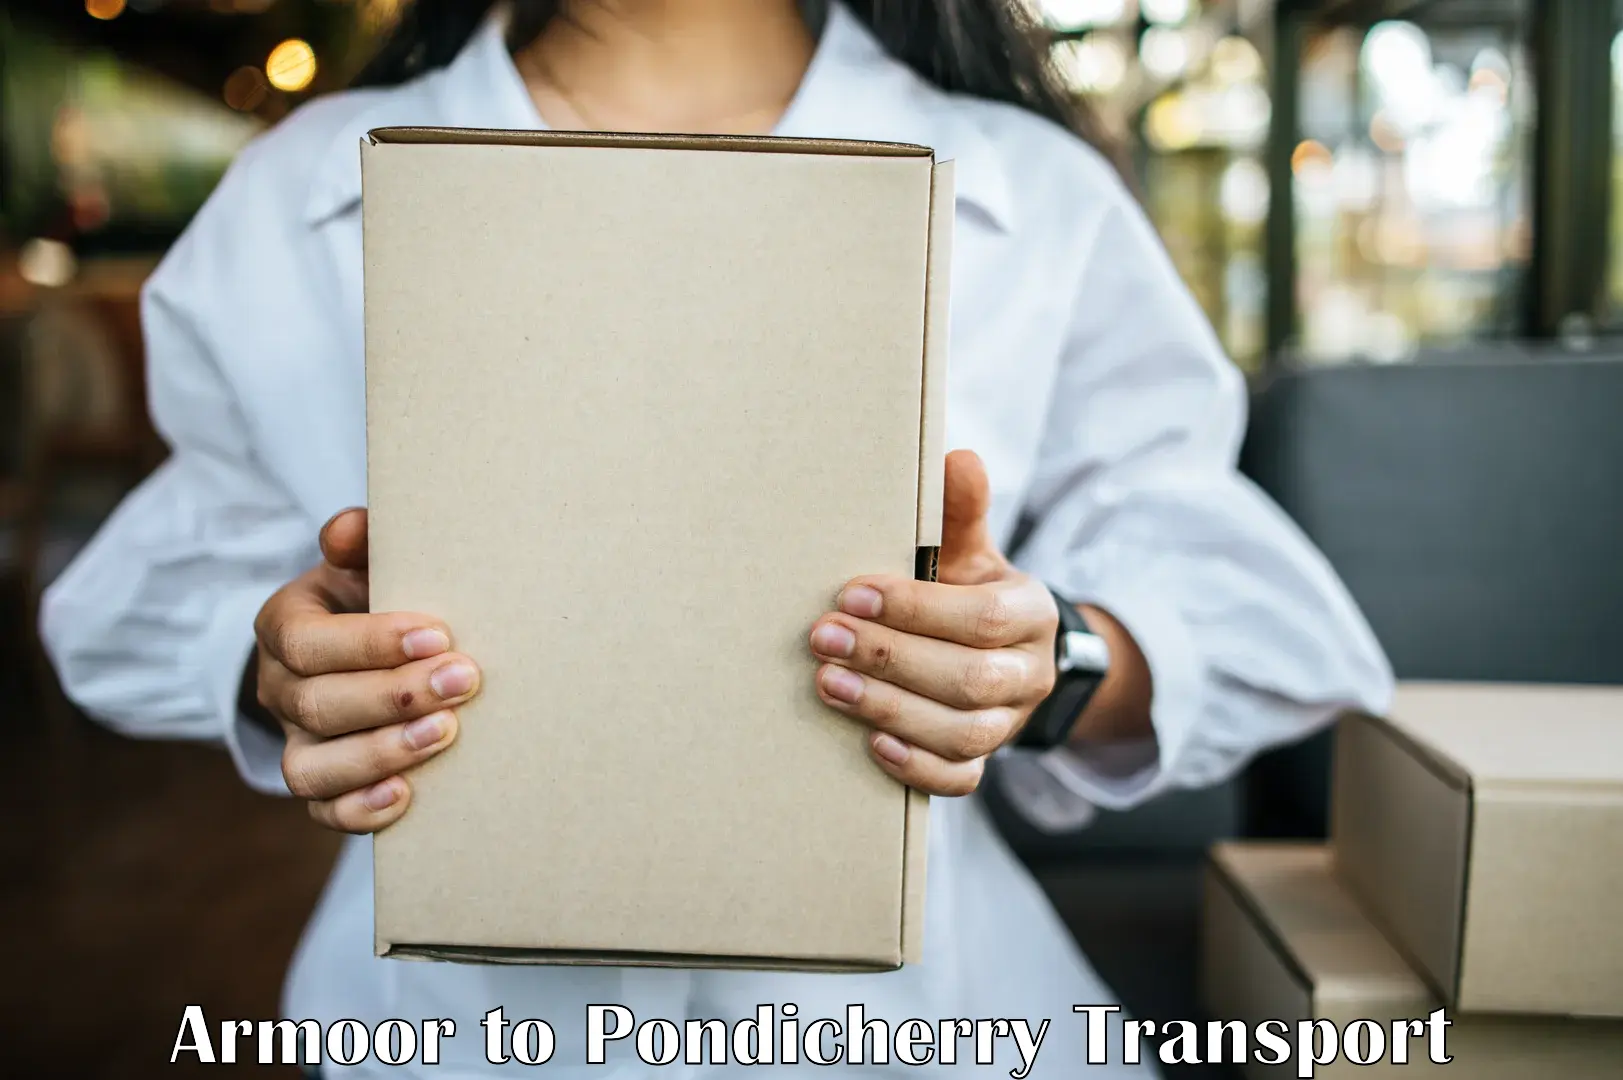 Daily transport service Armoor to Pondicherry University